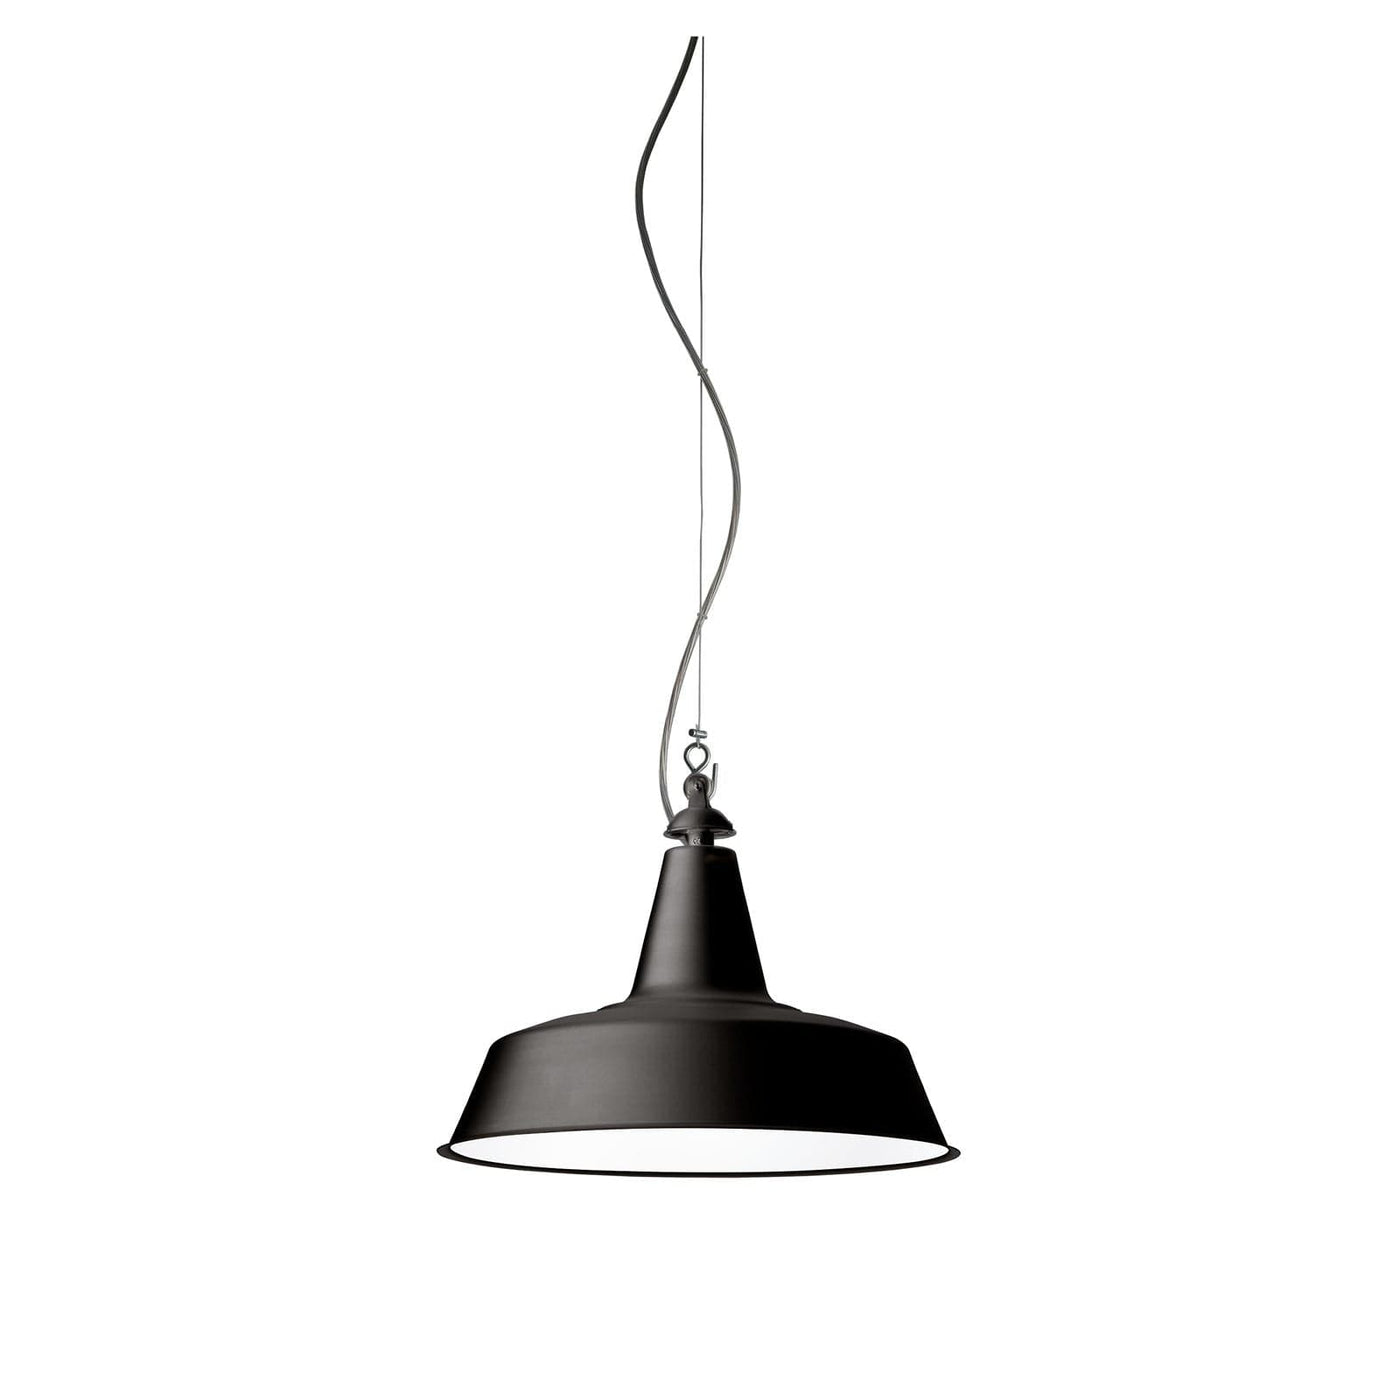 Suspension Lamp HUNA by FontanaArte Design Lab for FontanaArte 02